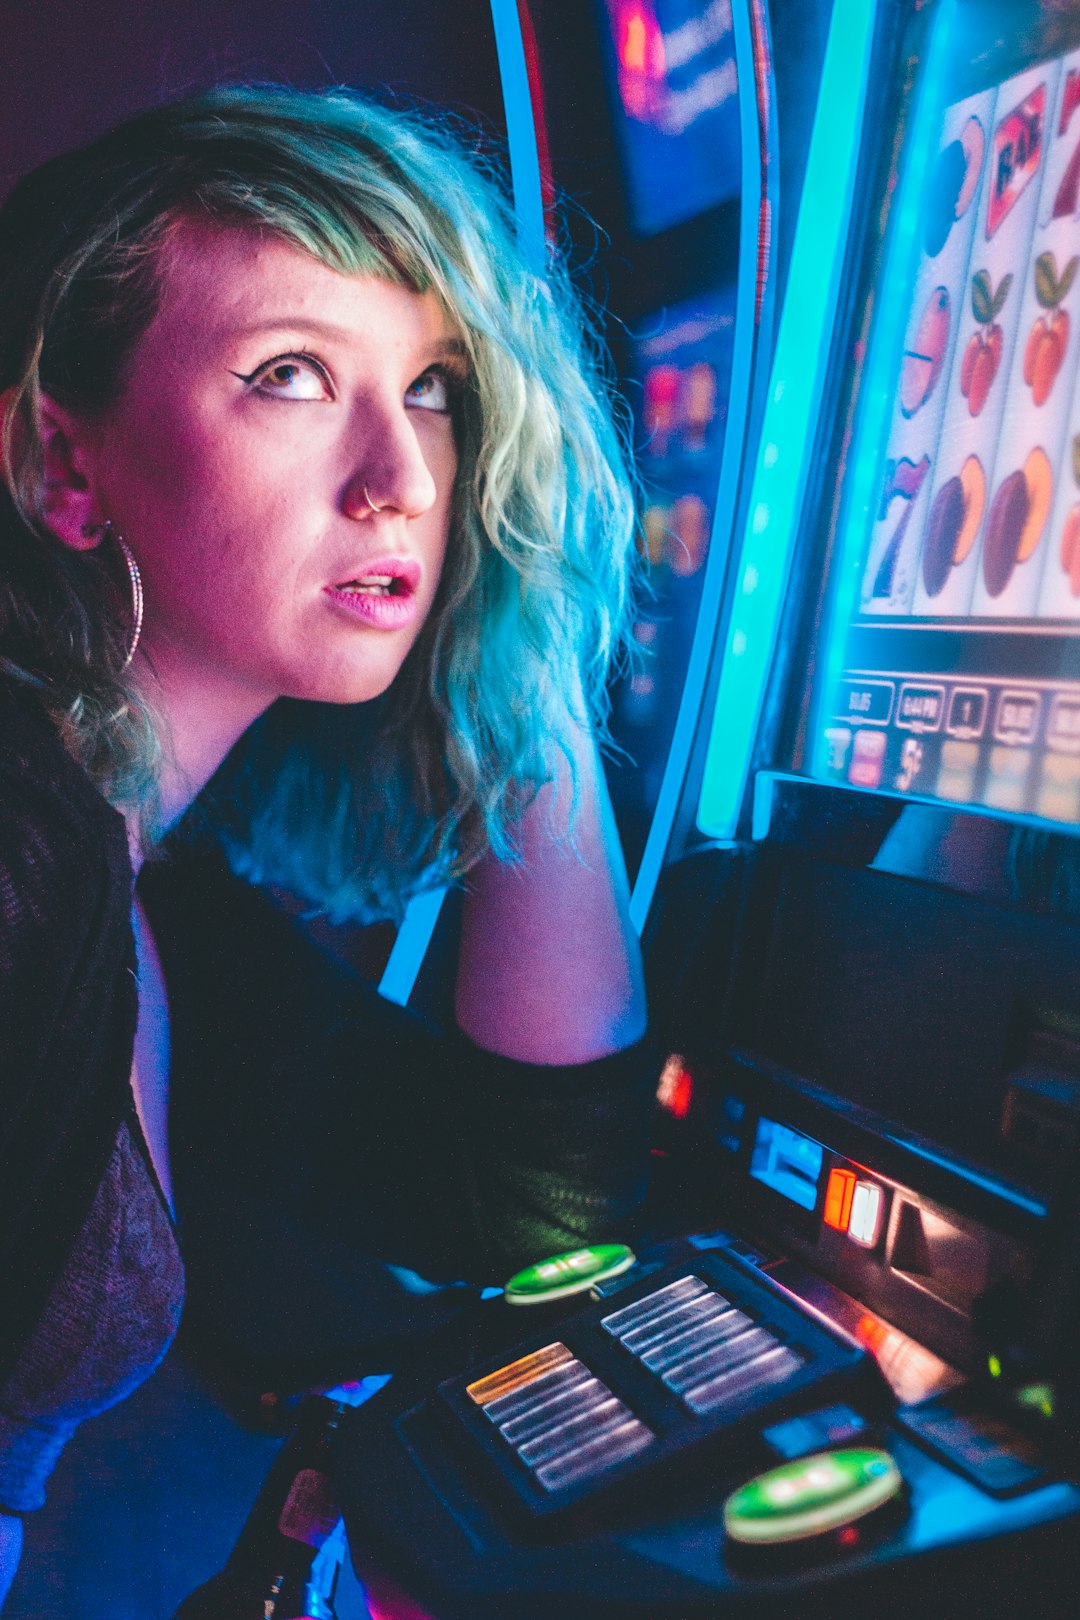 woman plying lucky 7 slot machine